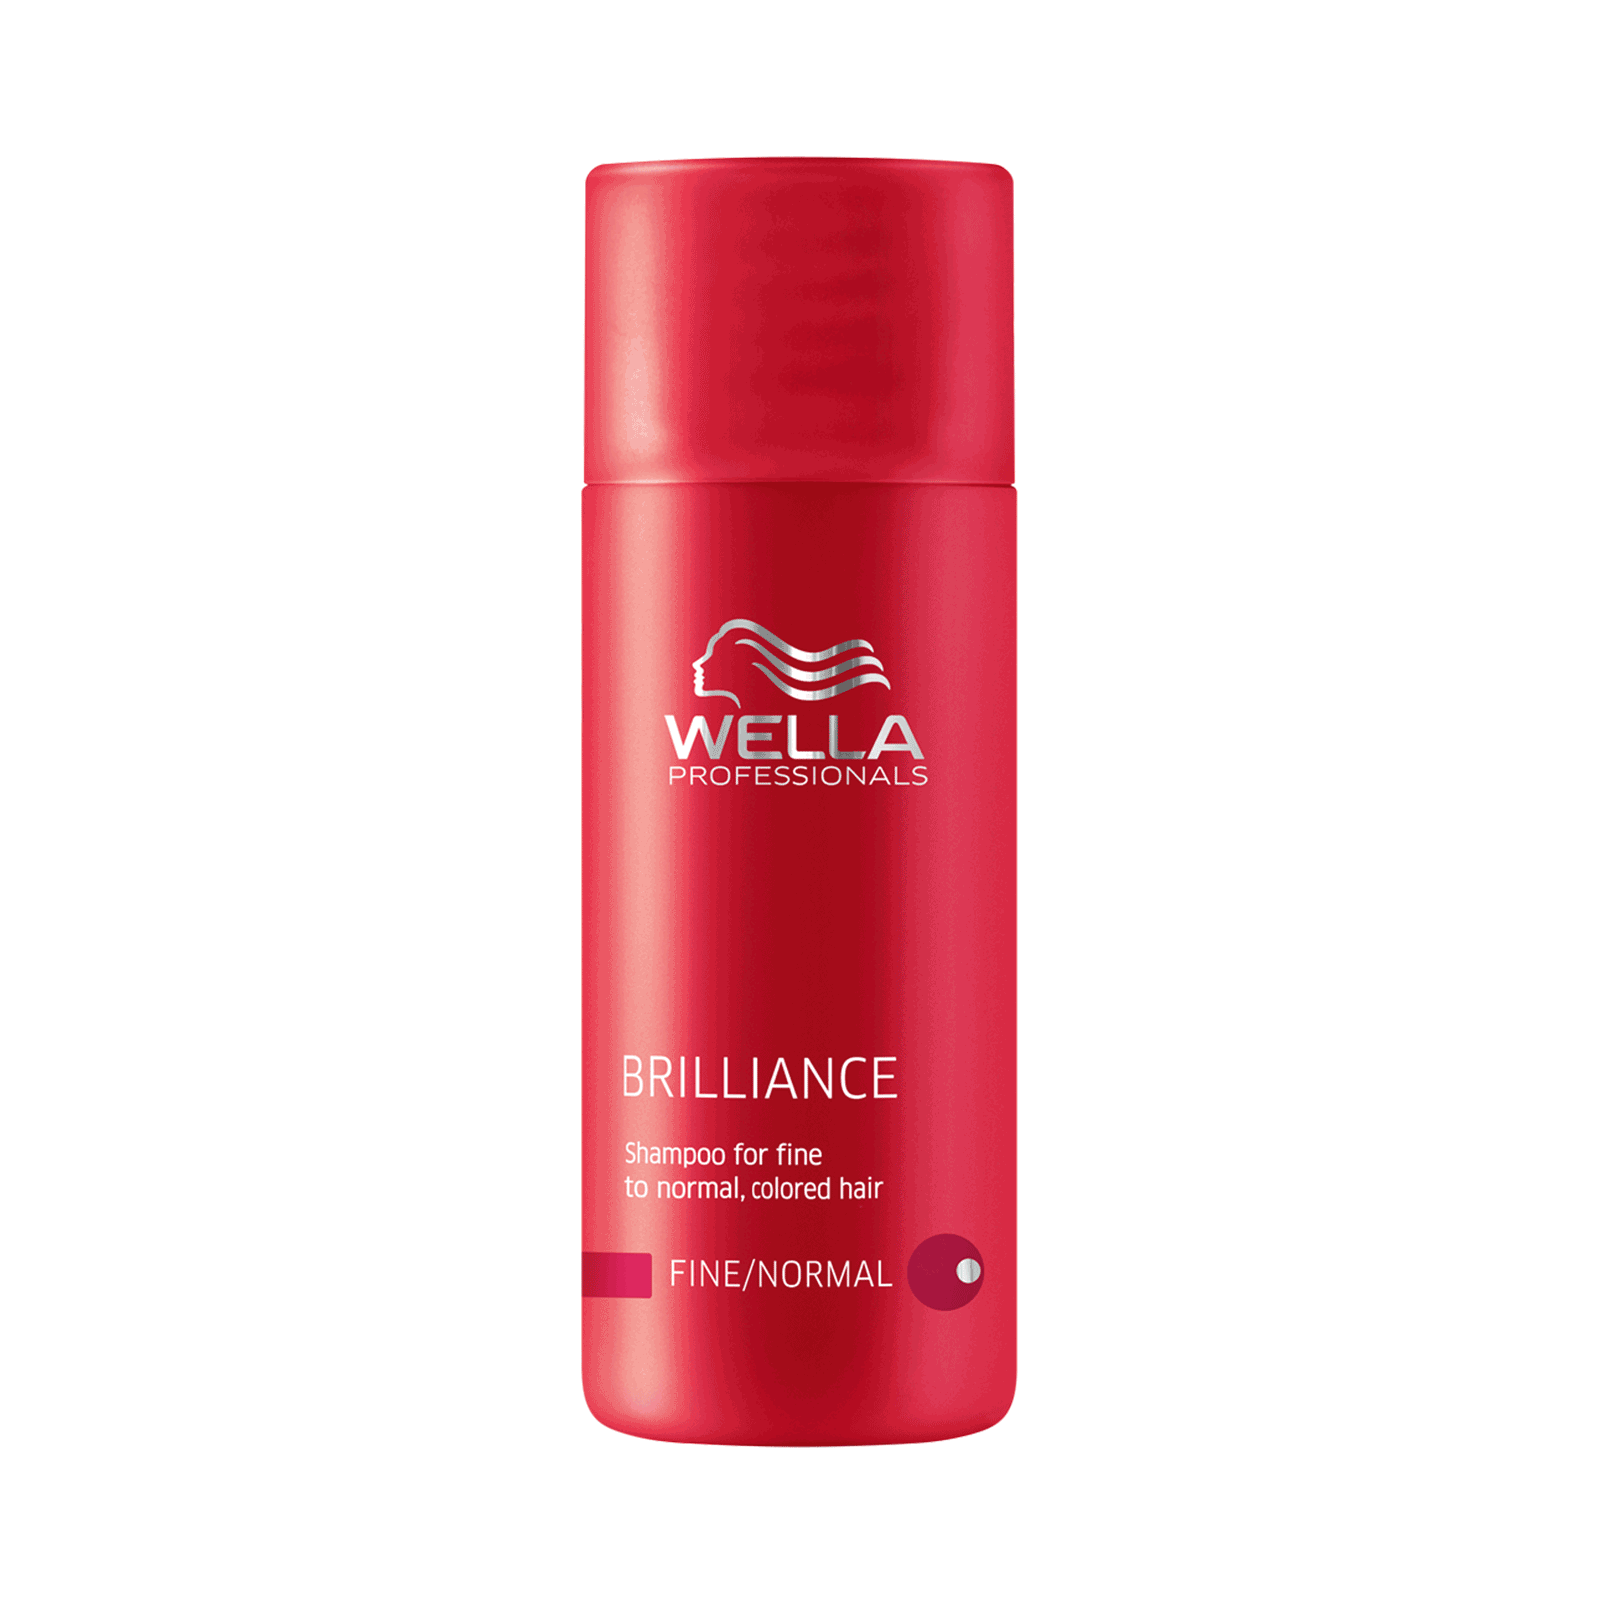 Brilliance Shampoo for Fine/Normal, Colored Hair - Wella | CosmoProf